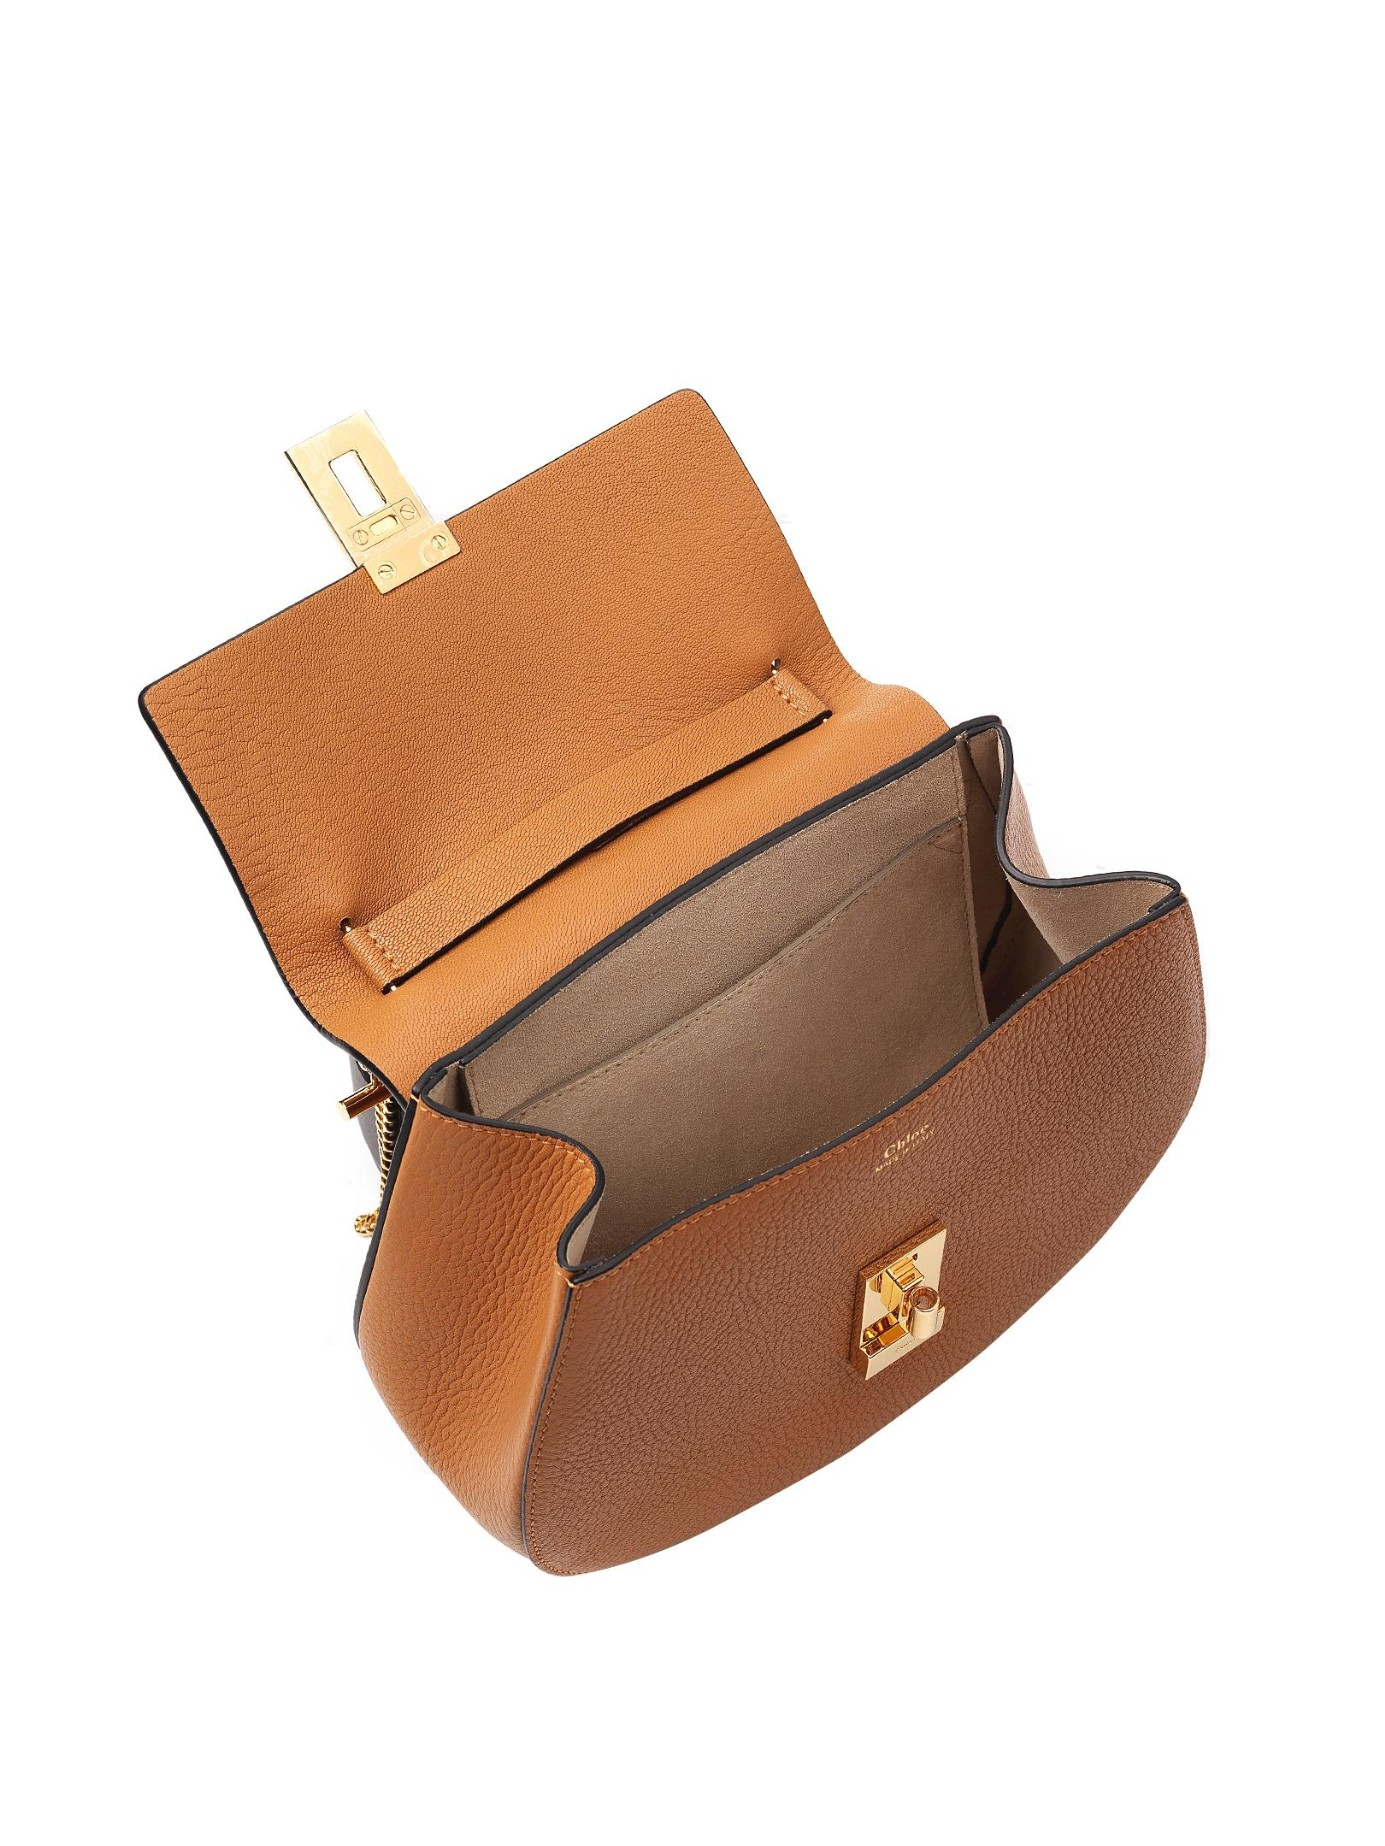 chloe leather handbags - Chlo Drew Small Leather Shoulder Bag in Brown (TAN) | Lyst